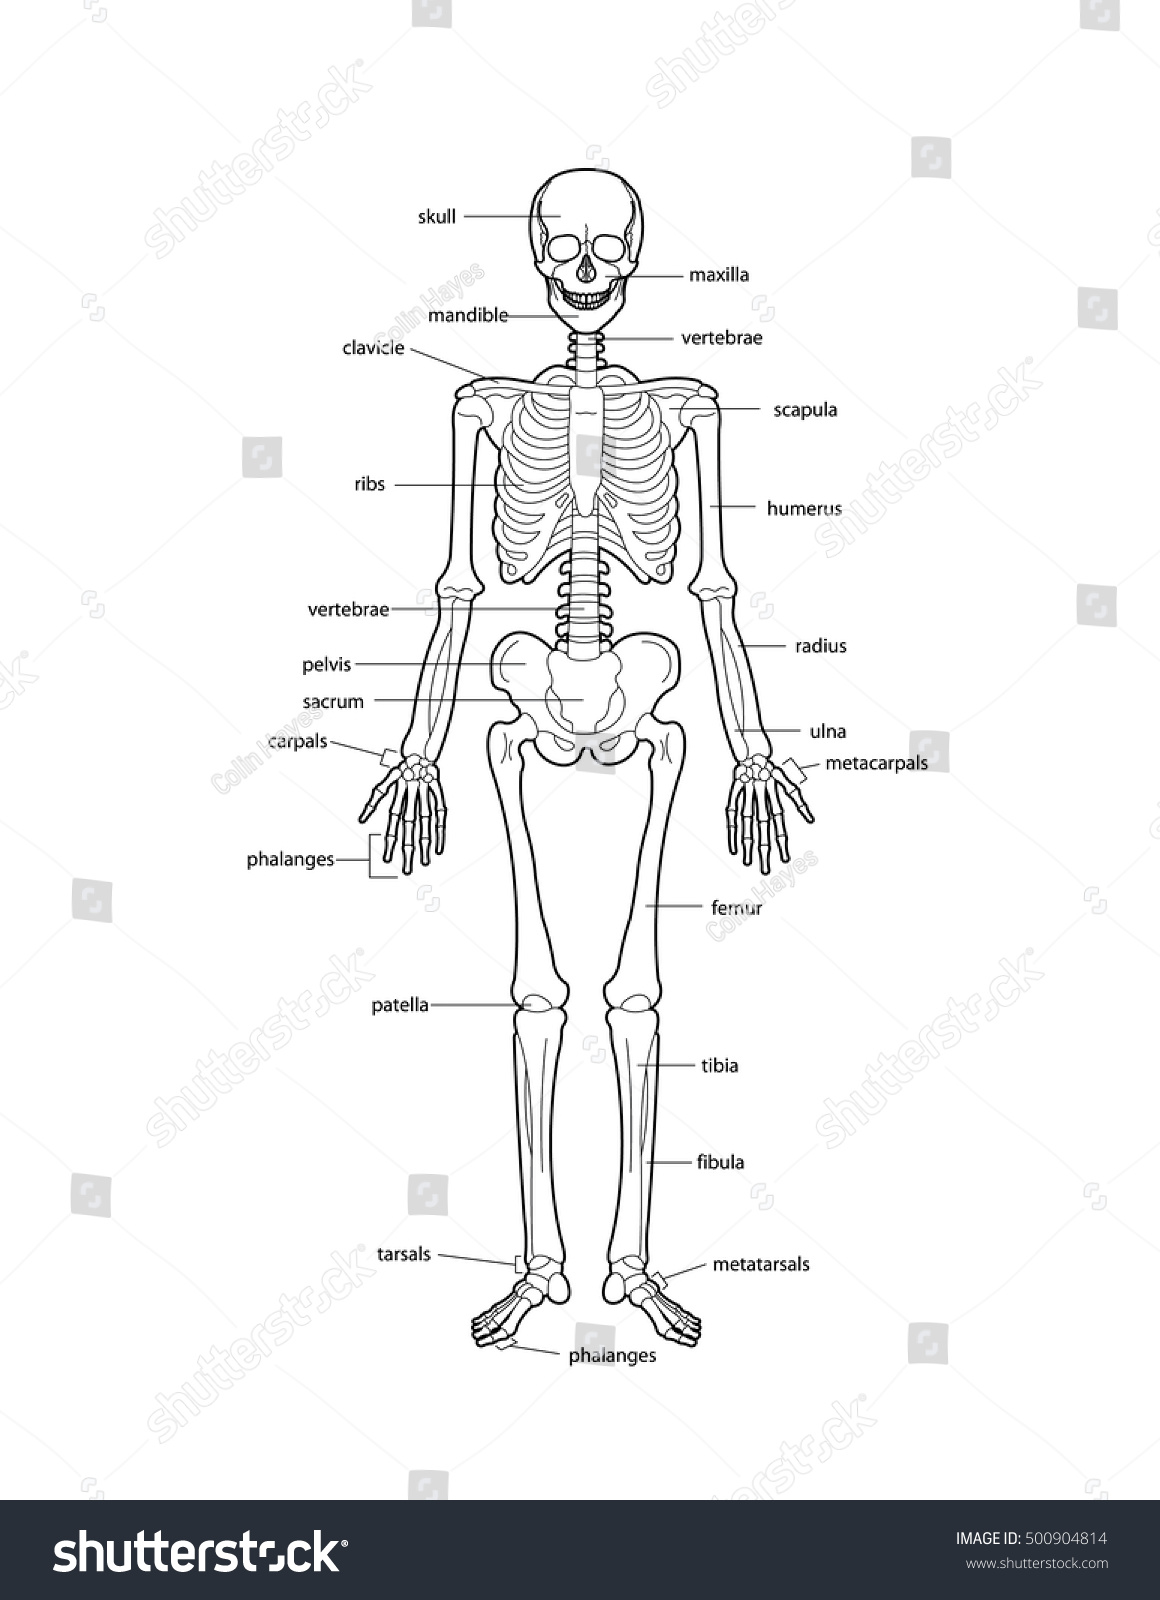 Human Skeleton Bones Labeled Stock Vector 500904814 - Shutterstock